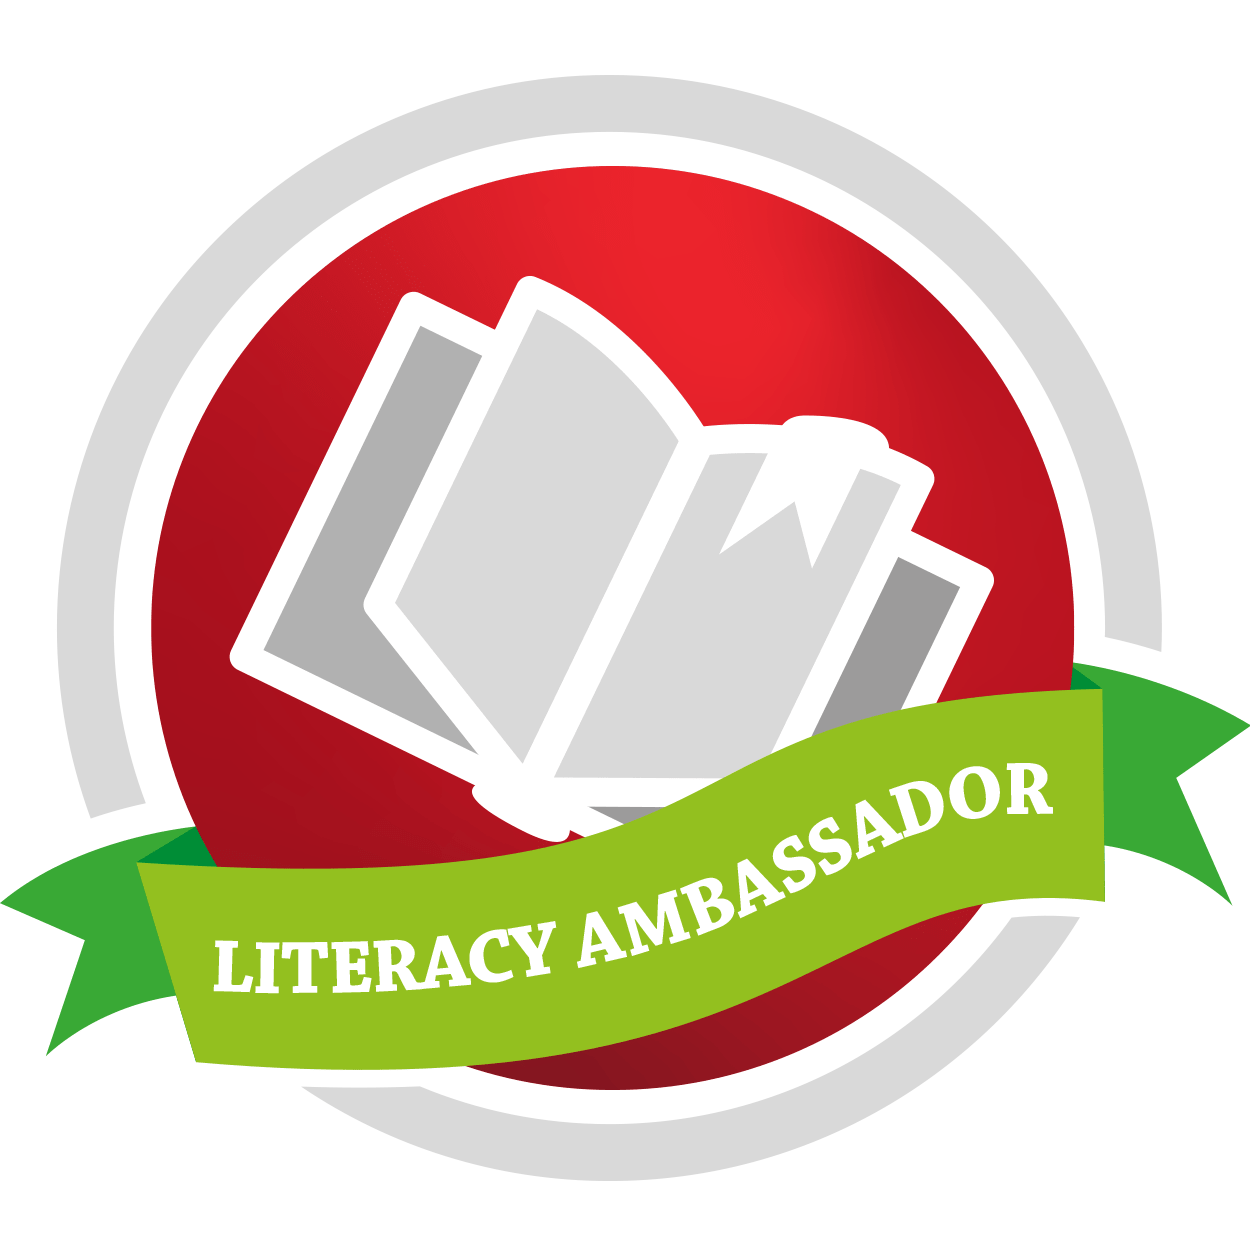 Literacy Ambassador